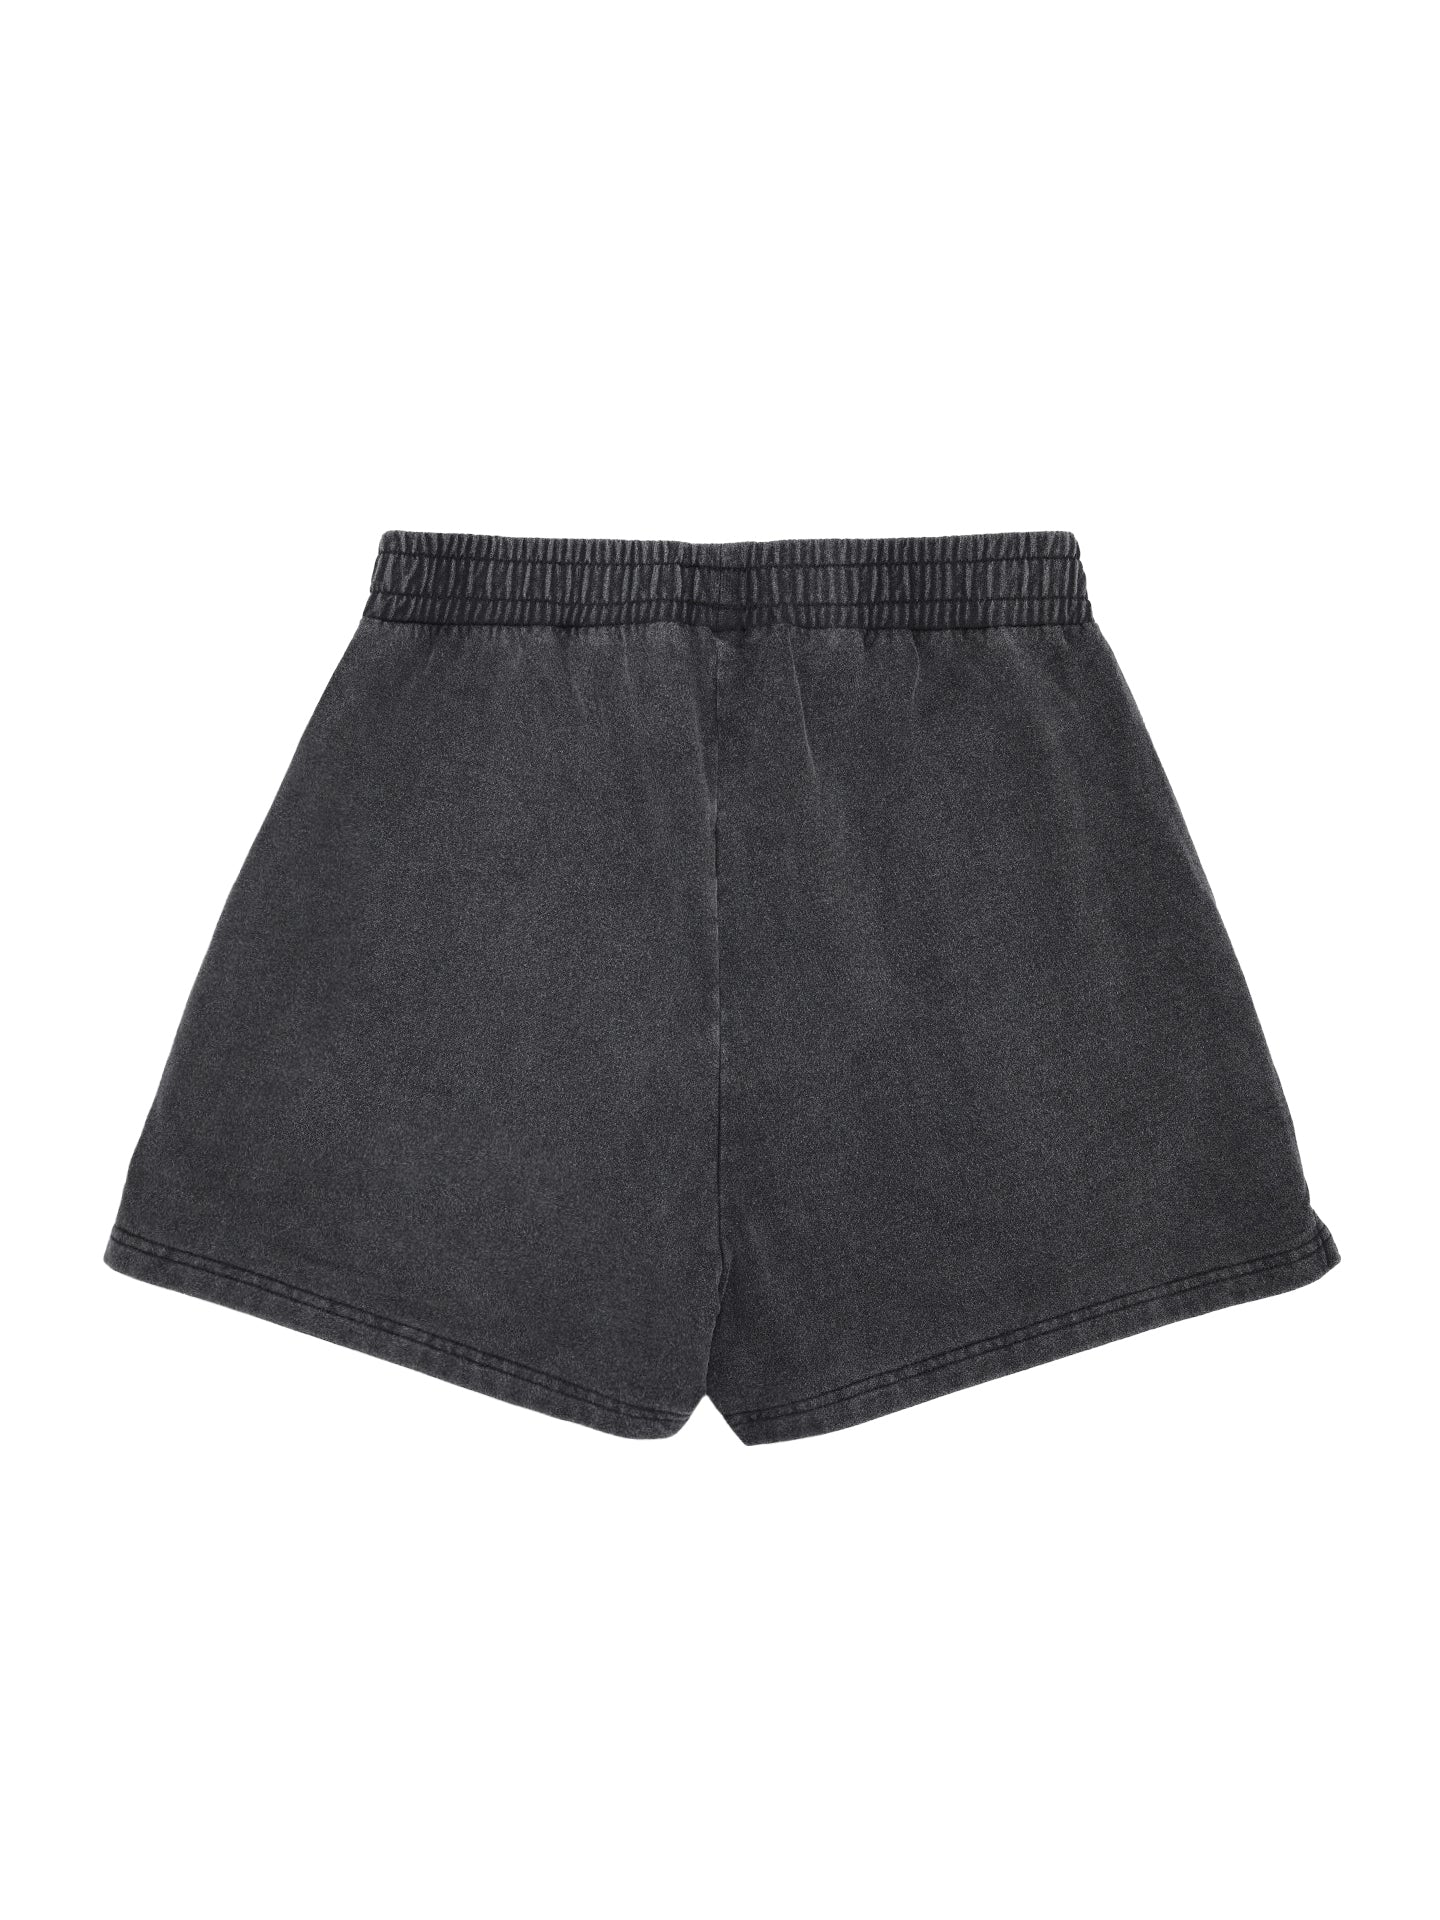 Shorts - vintage schwarz